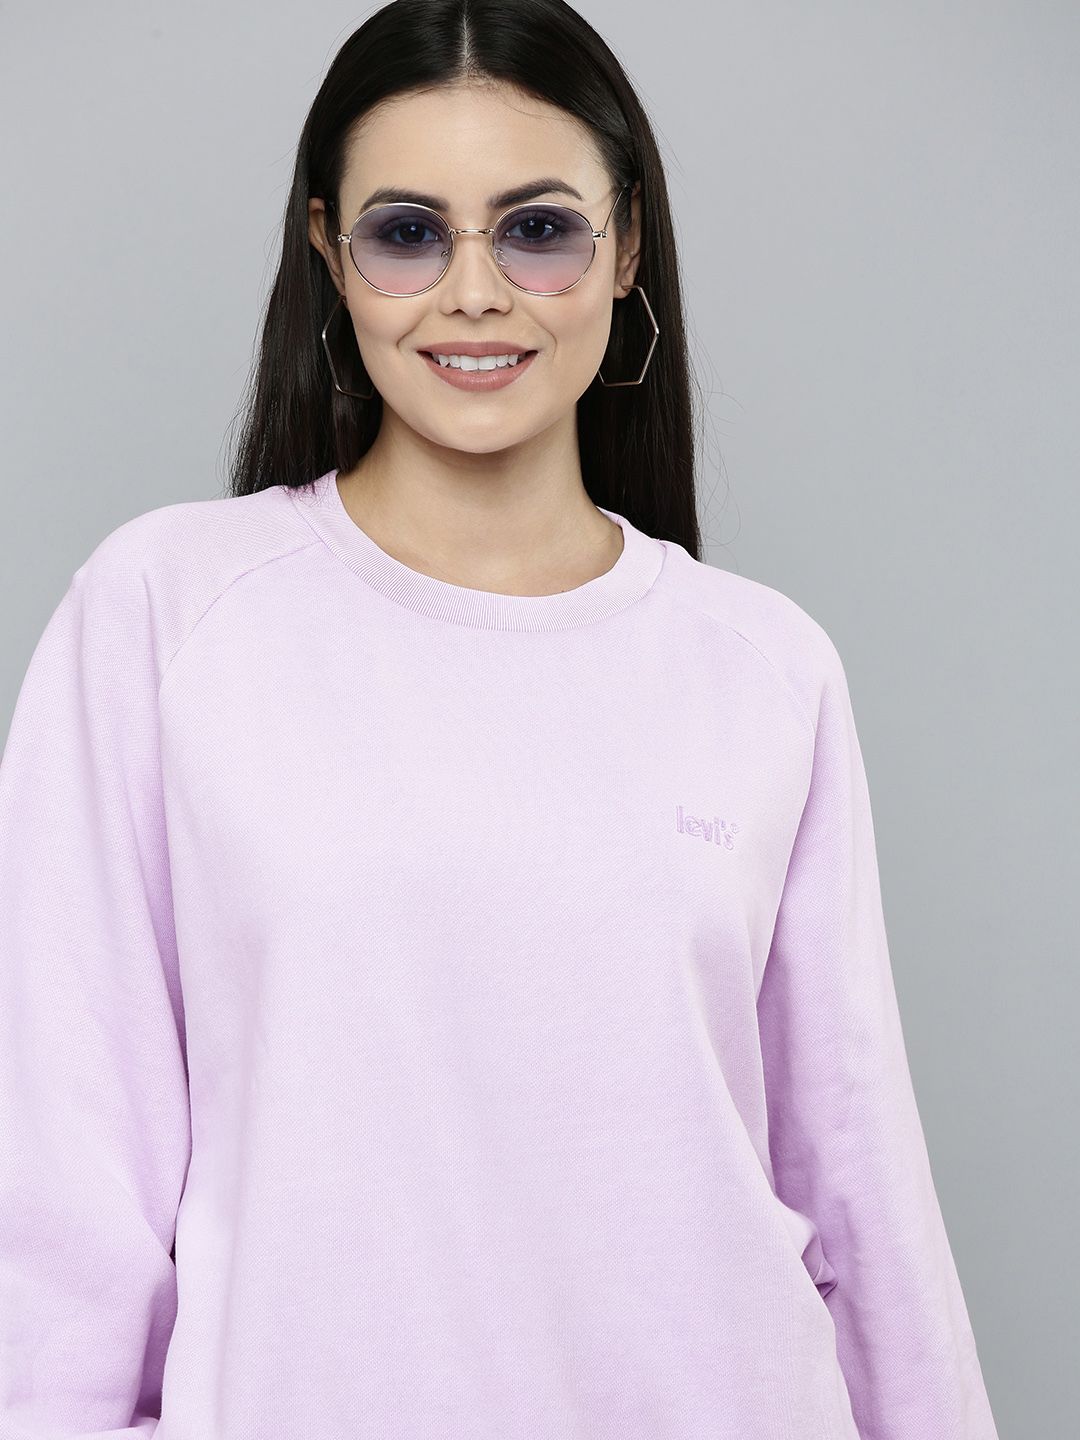 Levis Women Lavender Solid Sweatshirt Price in India